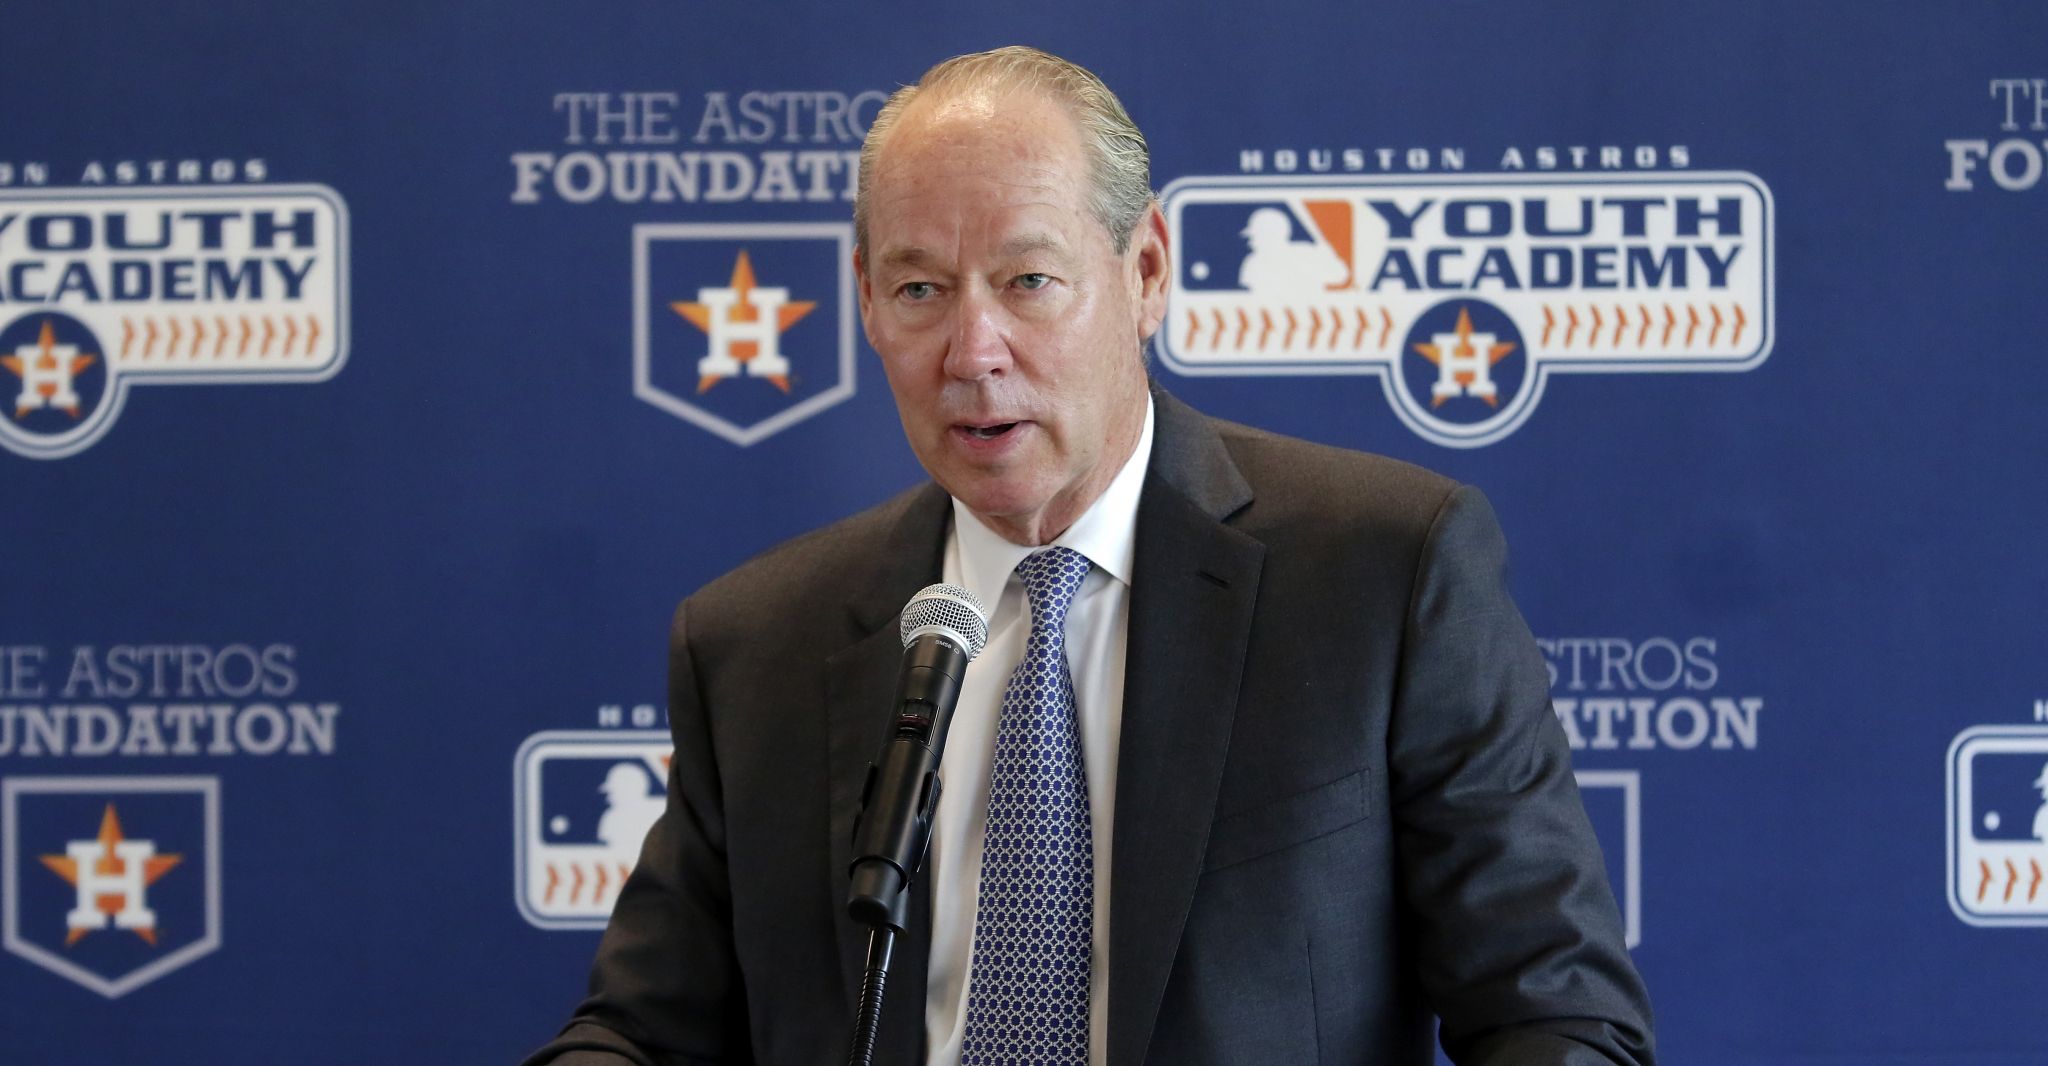 Astros Foundation donates $400,000 to Houston hospitals